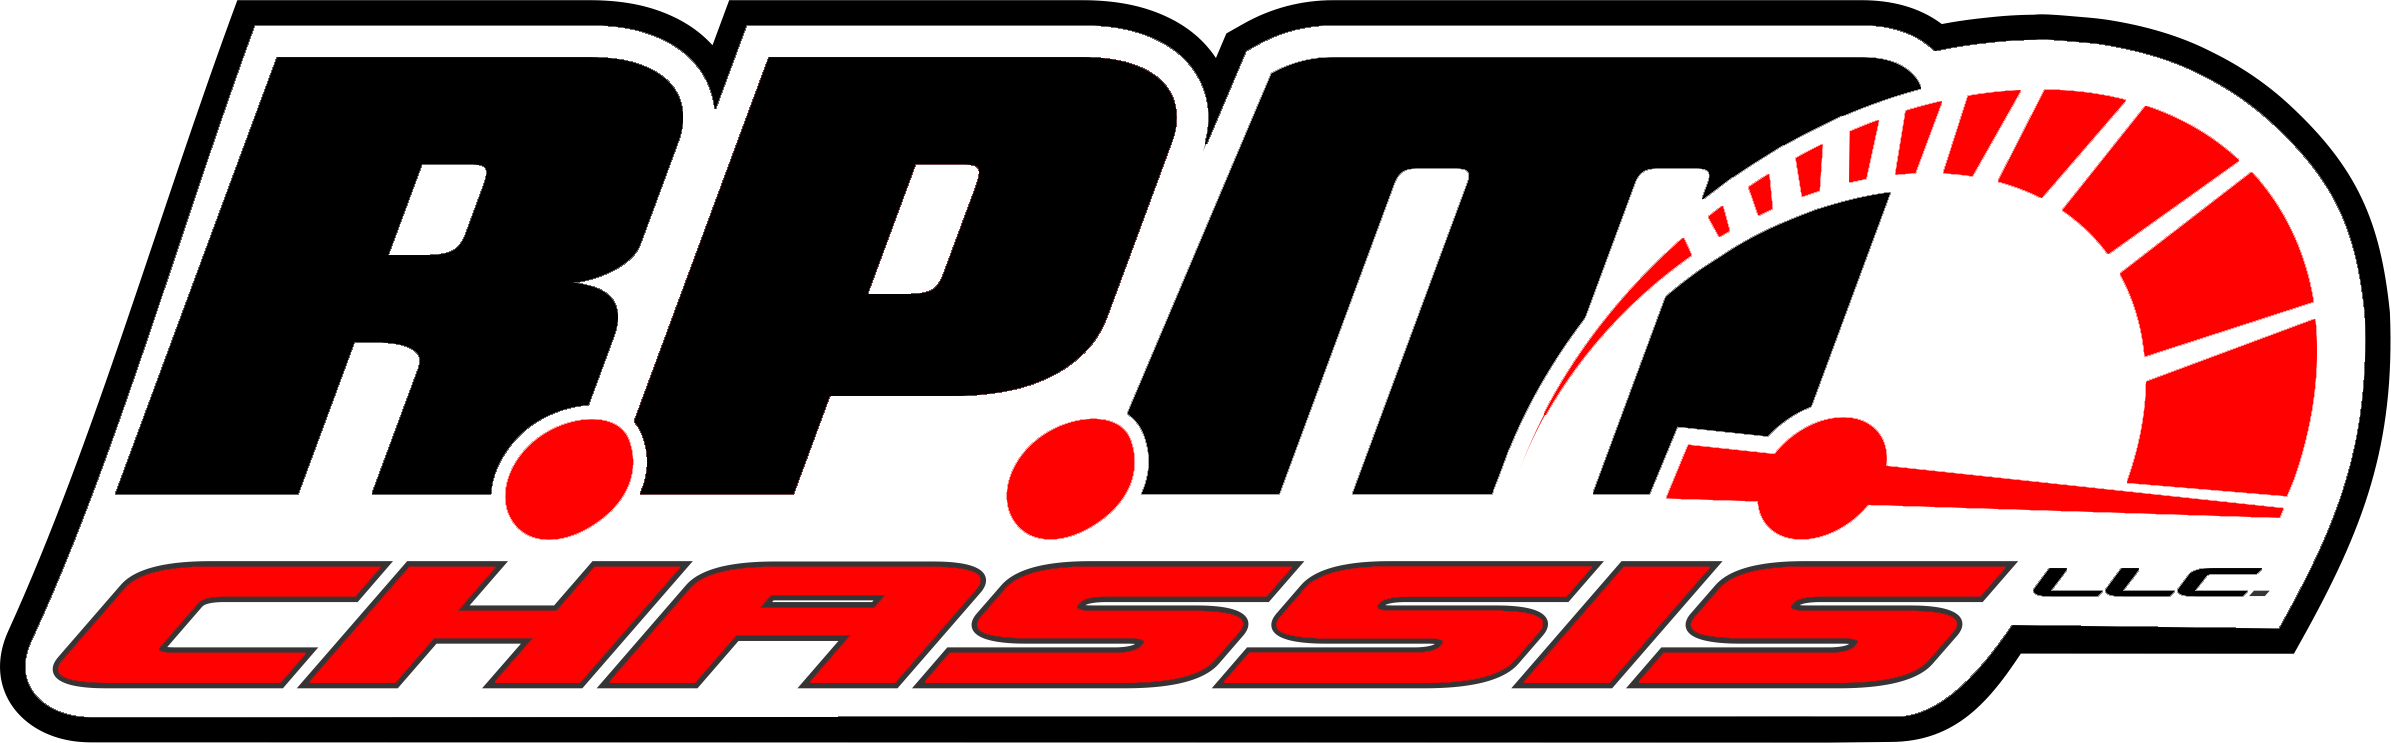 RPM лого. Vitoline logo. Эмблема РПМ. RPM Тачки логотип.